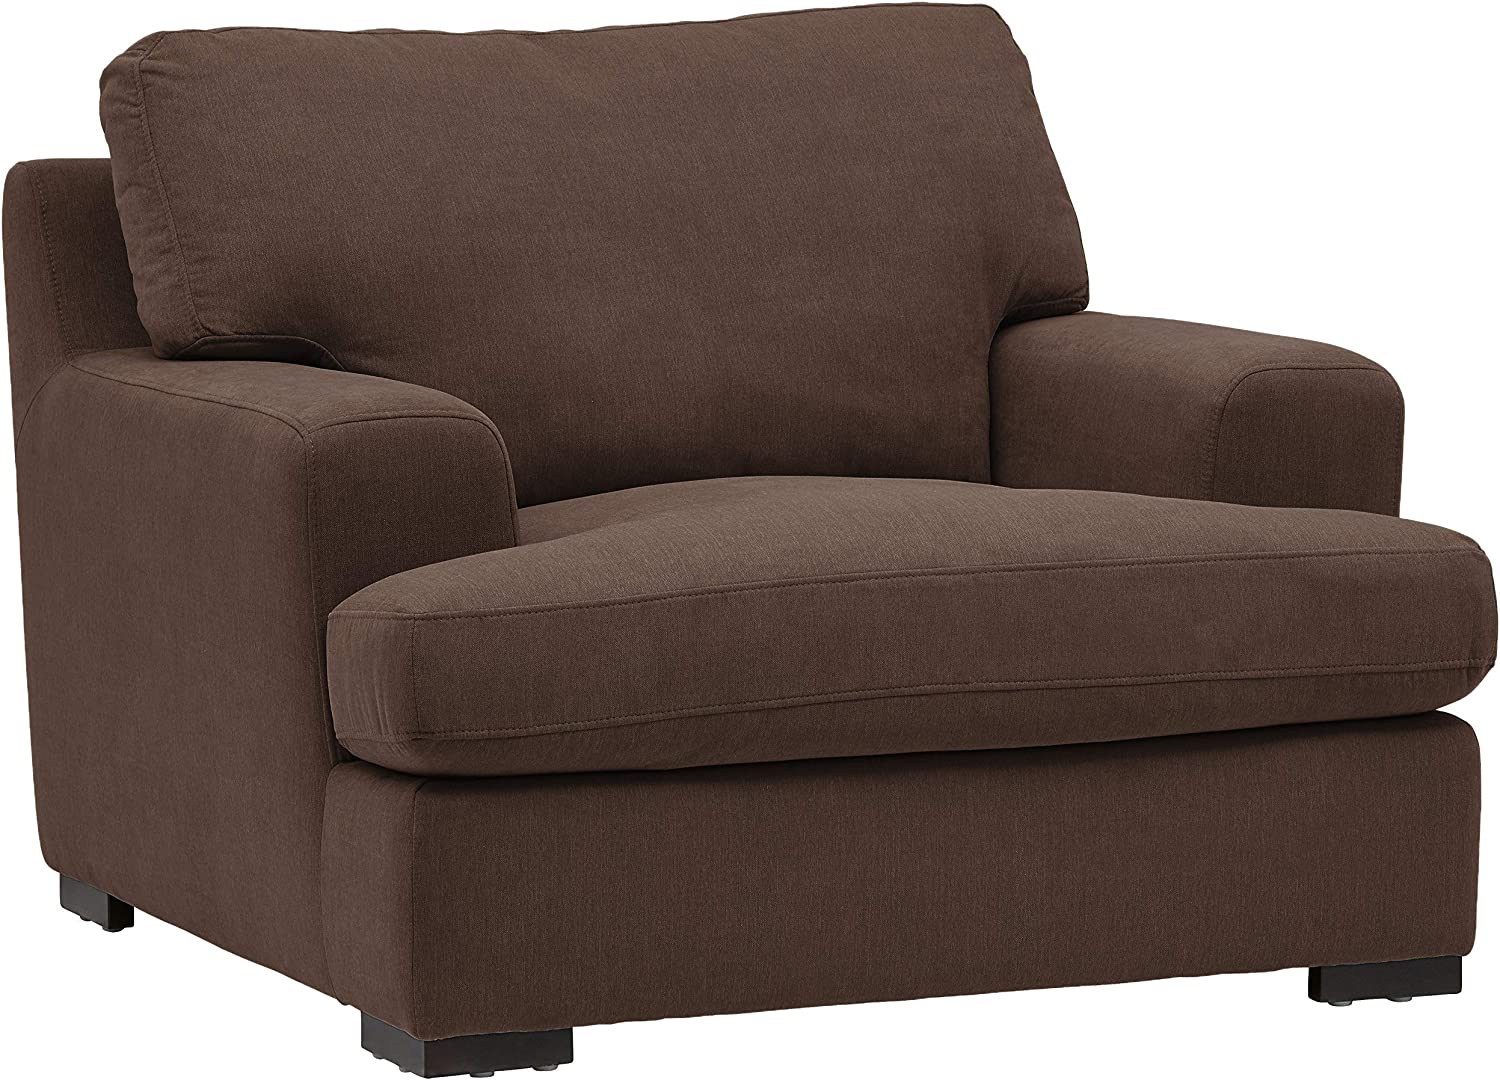 Stone & Beam Lauren Down-Filled Oversized Armchair, 46"W, Chocolate - $435